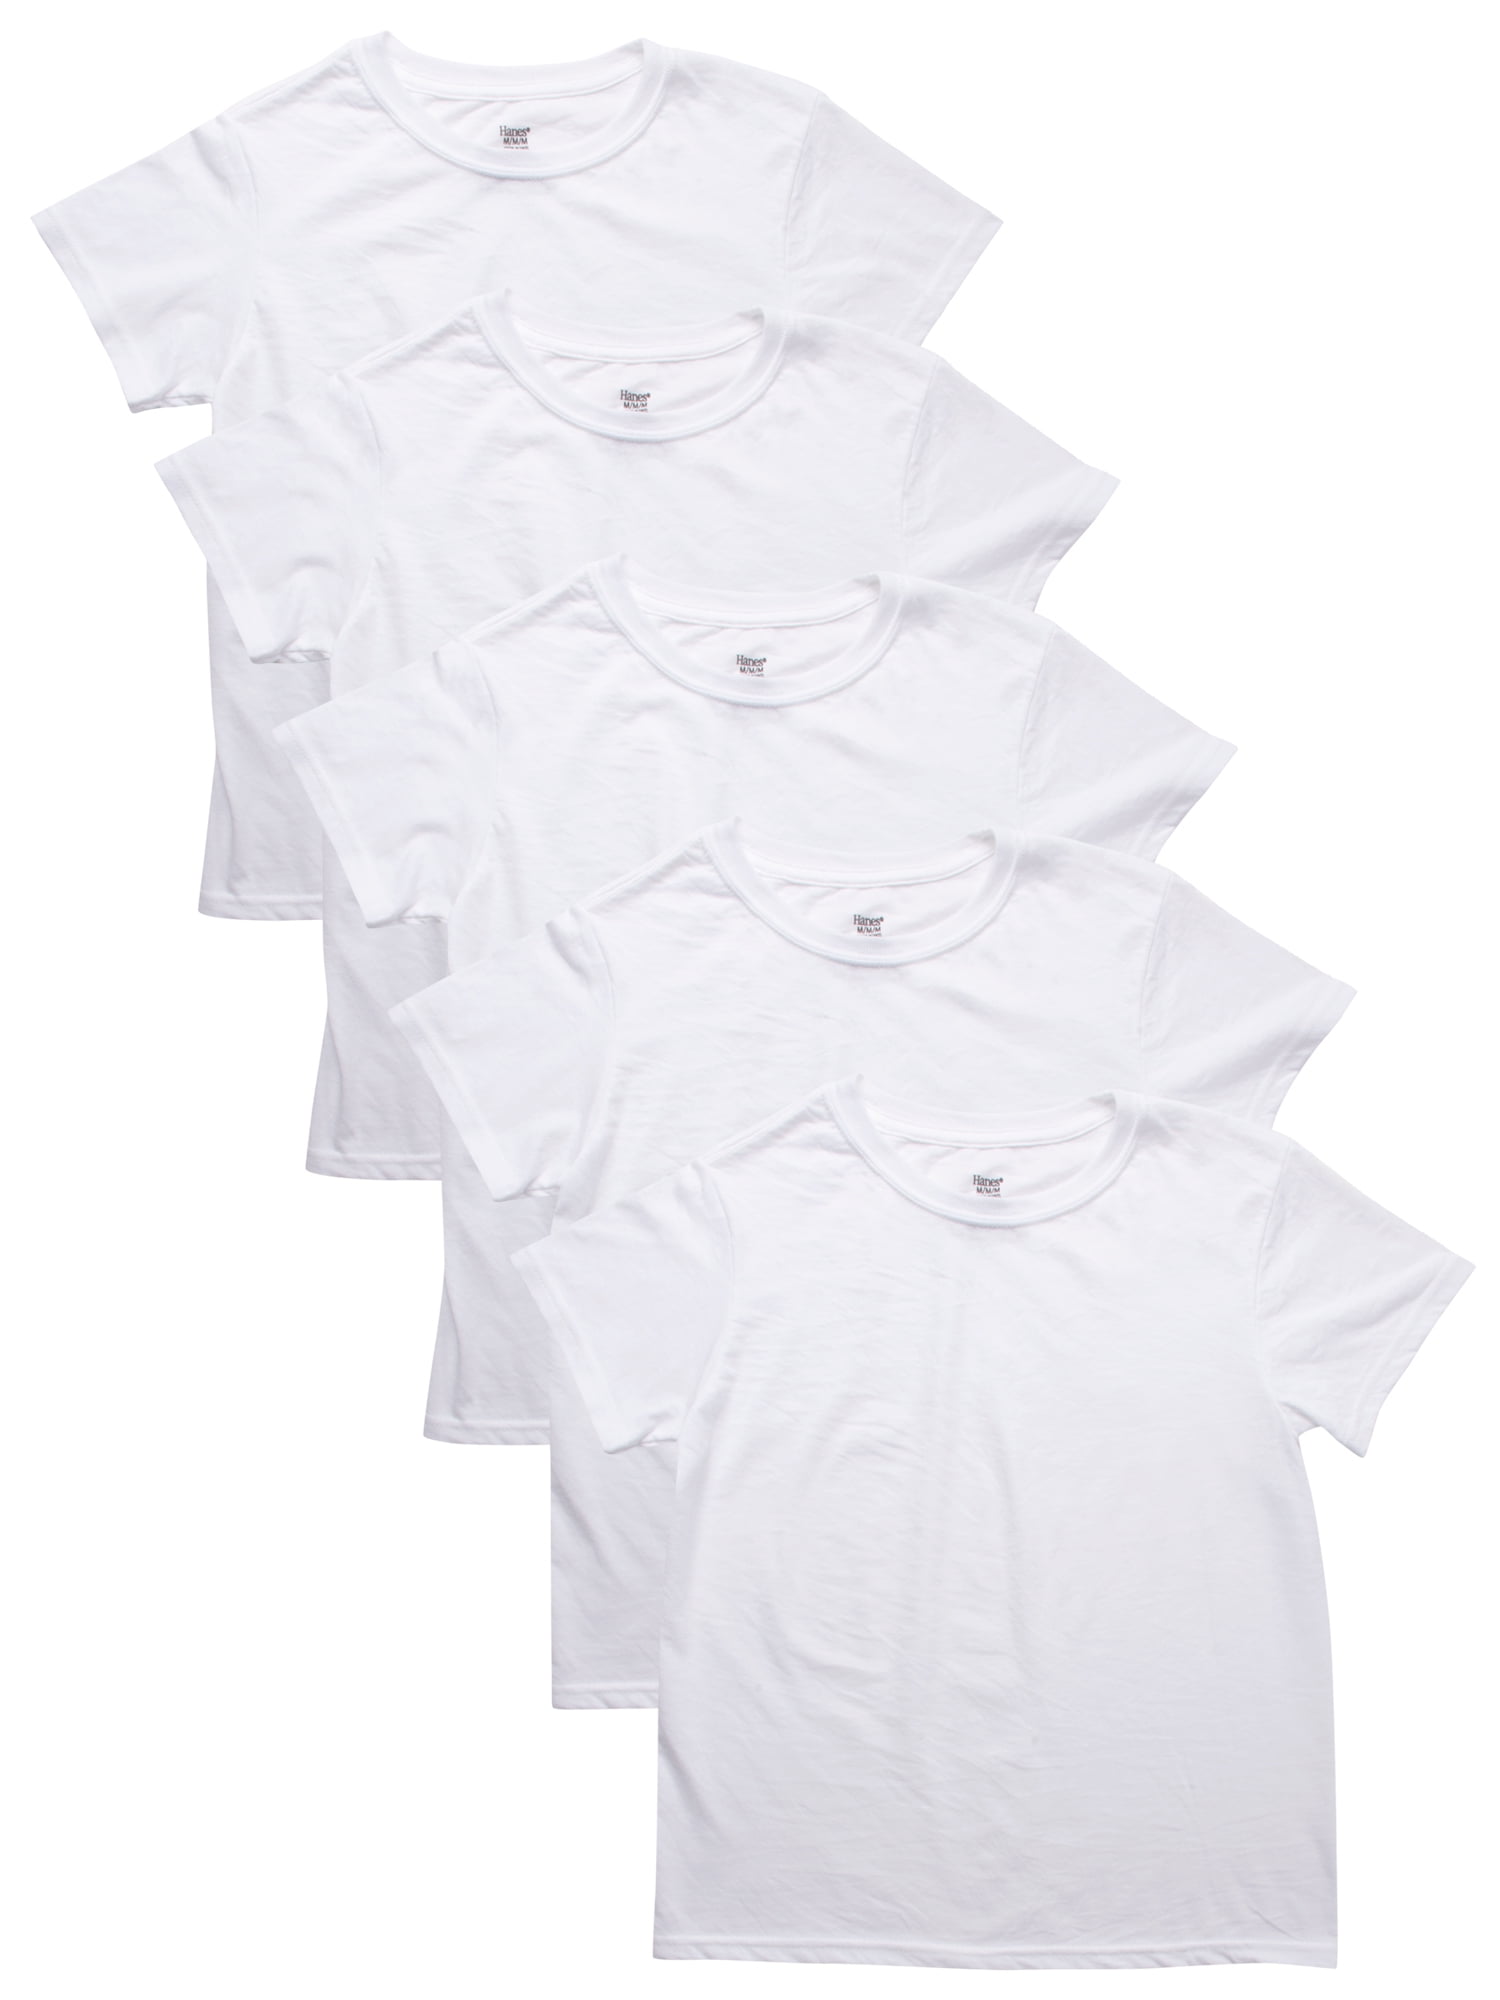 8-Pack Hanes Boys White Crew 100% Cotton Tagless T-Shirts B213S8 